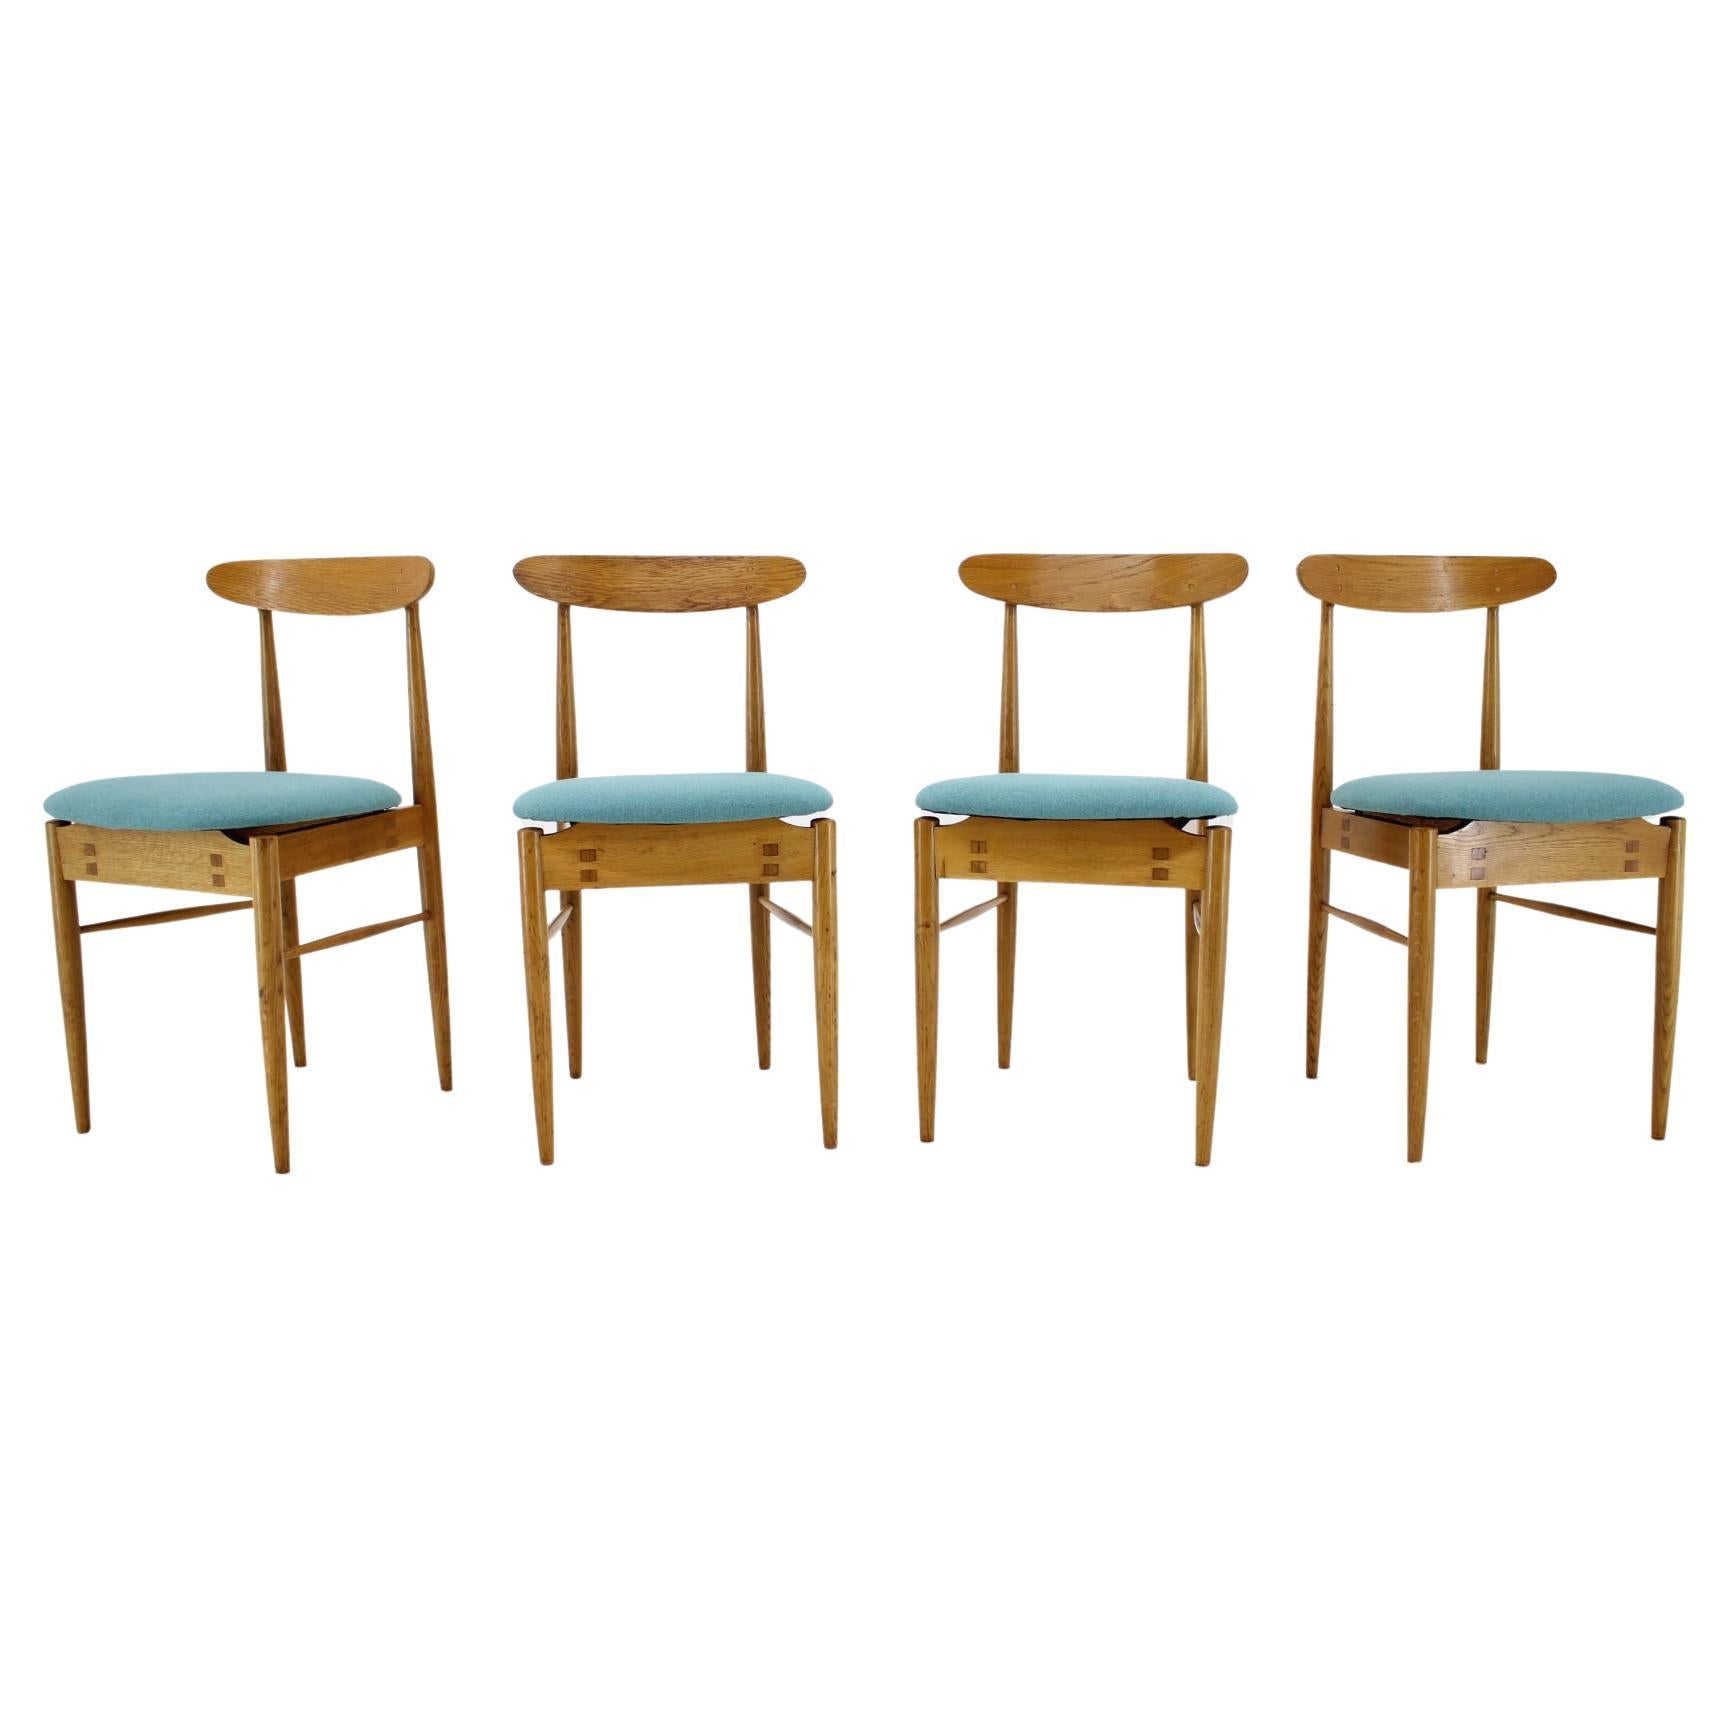 1960s Alan Fuchs Rare Dining Chairs for ULUV, Czechoslovakia